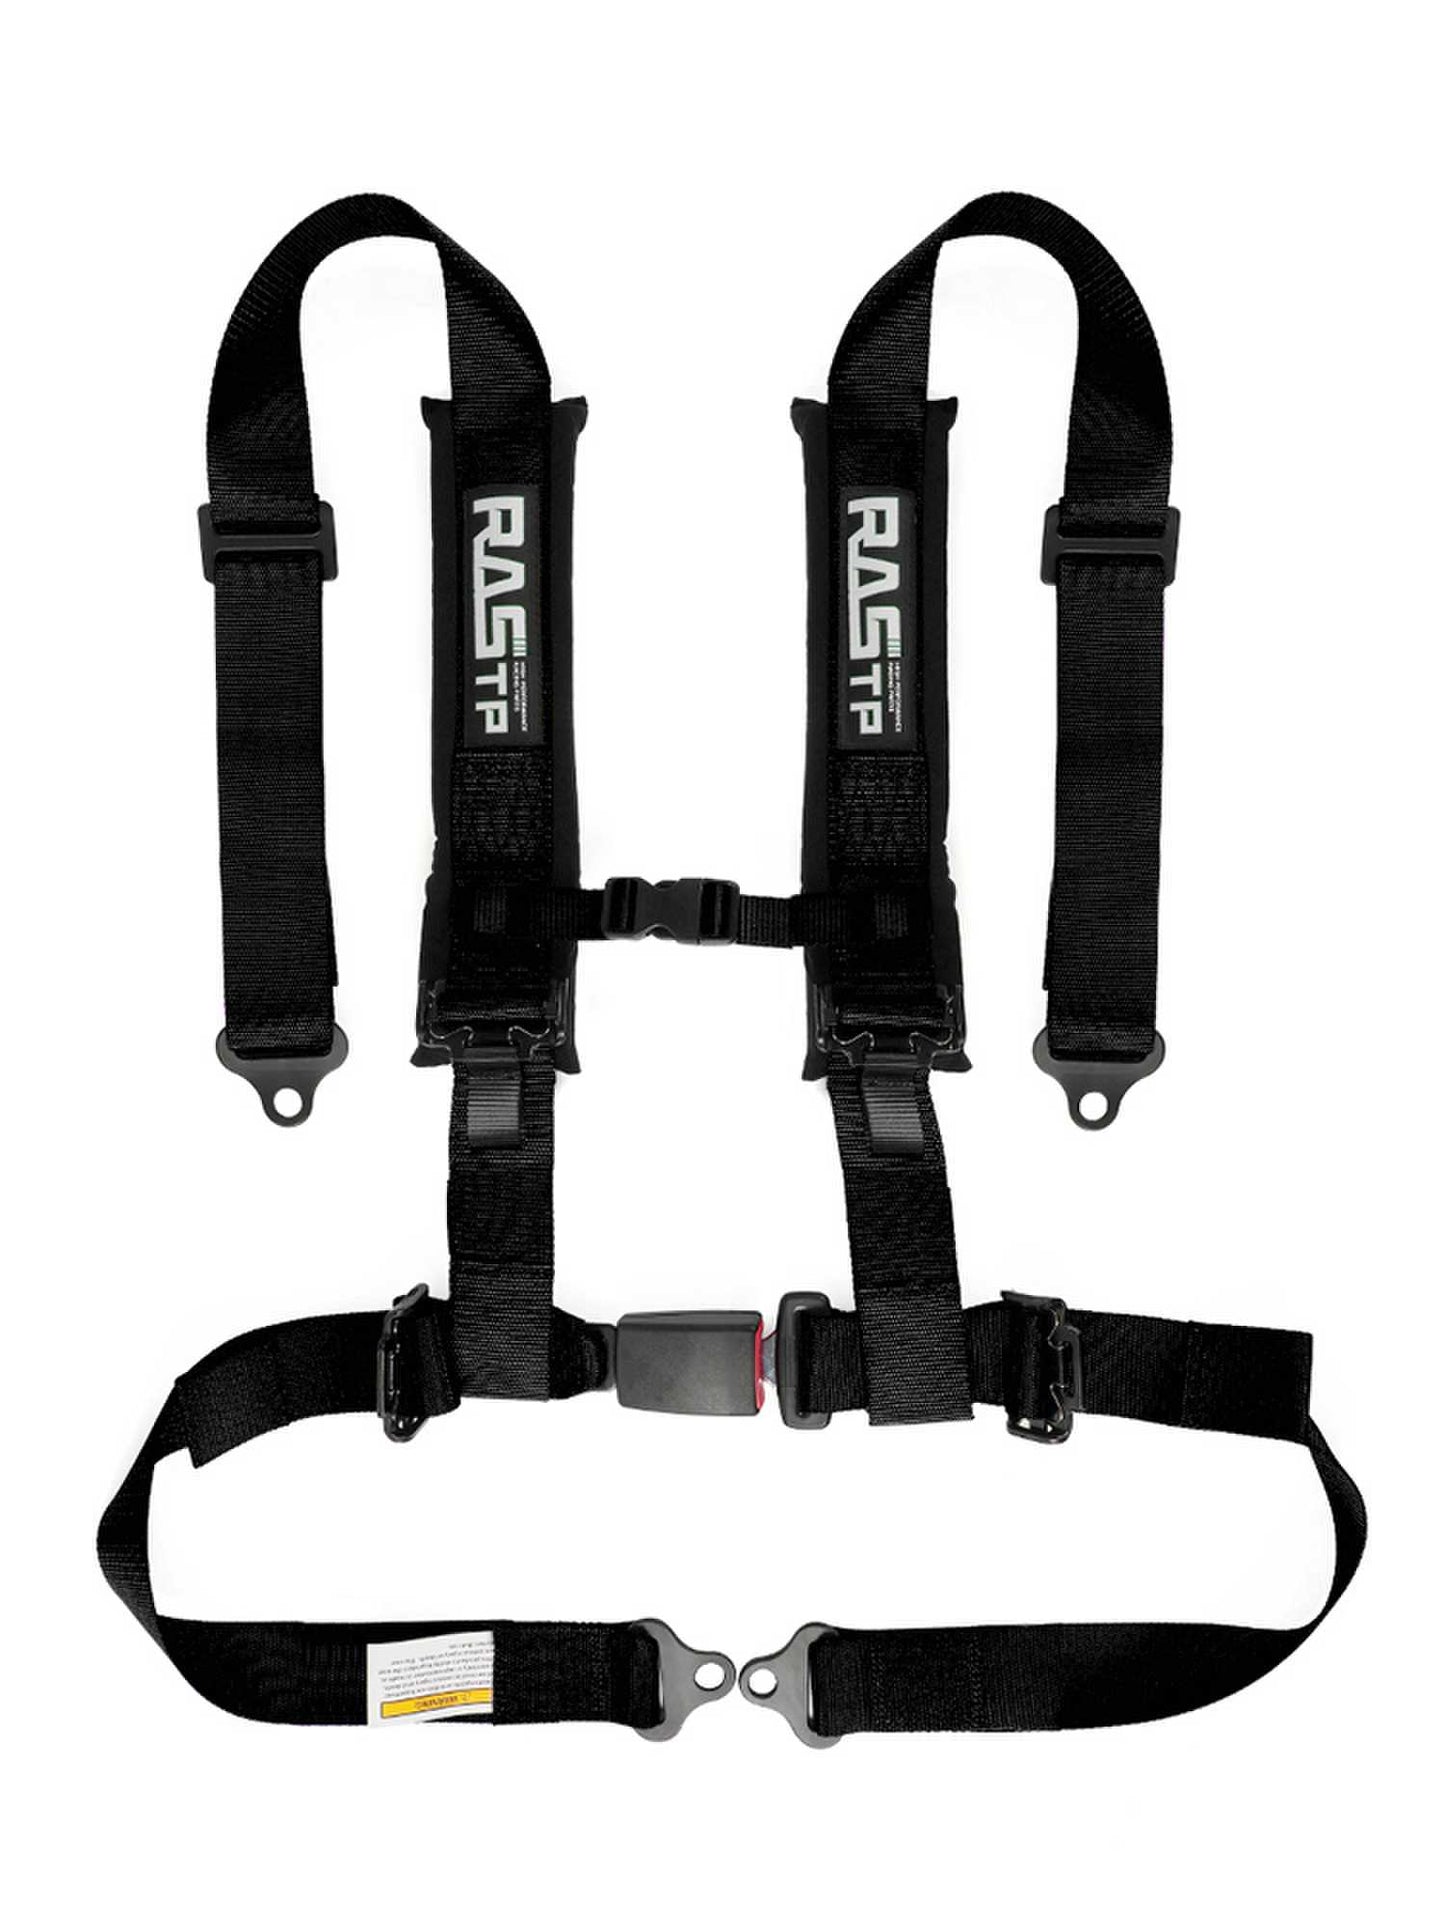 RASTP 4 Point Seat Belt Harness with 2 Inch Sponge Padding